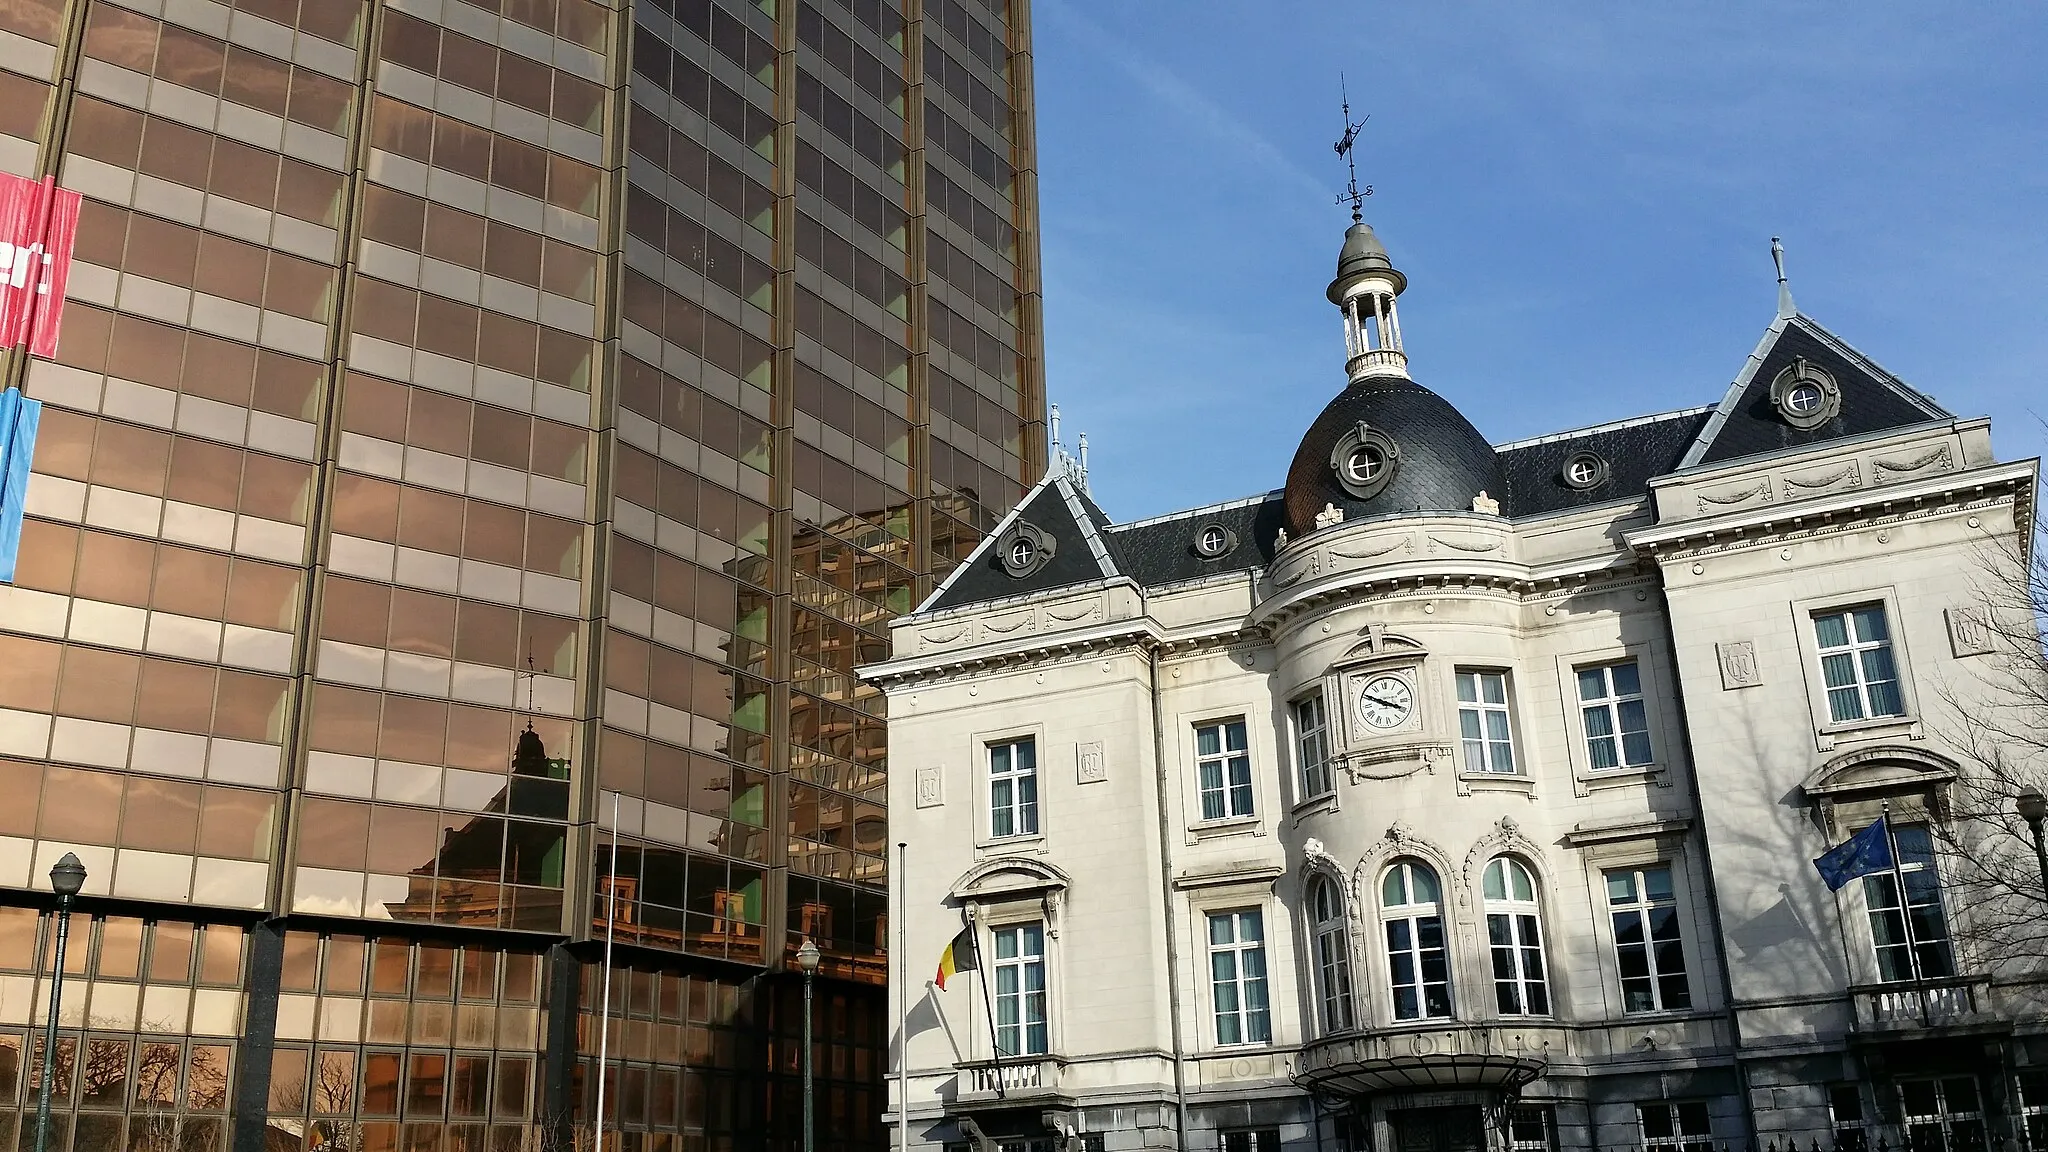 Image de Région de Bruxelles-Capitale/ Brussels Hoofdstedelijk Gewest